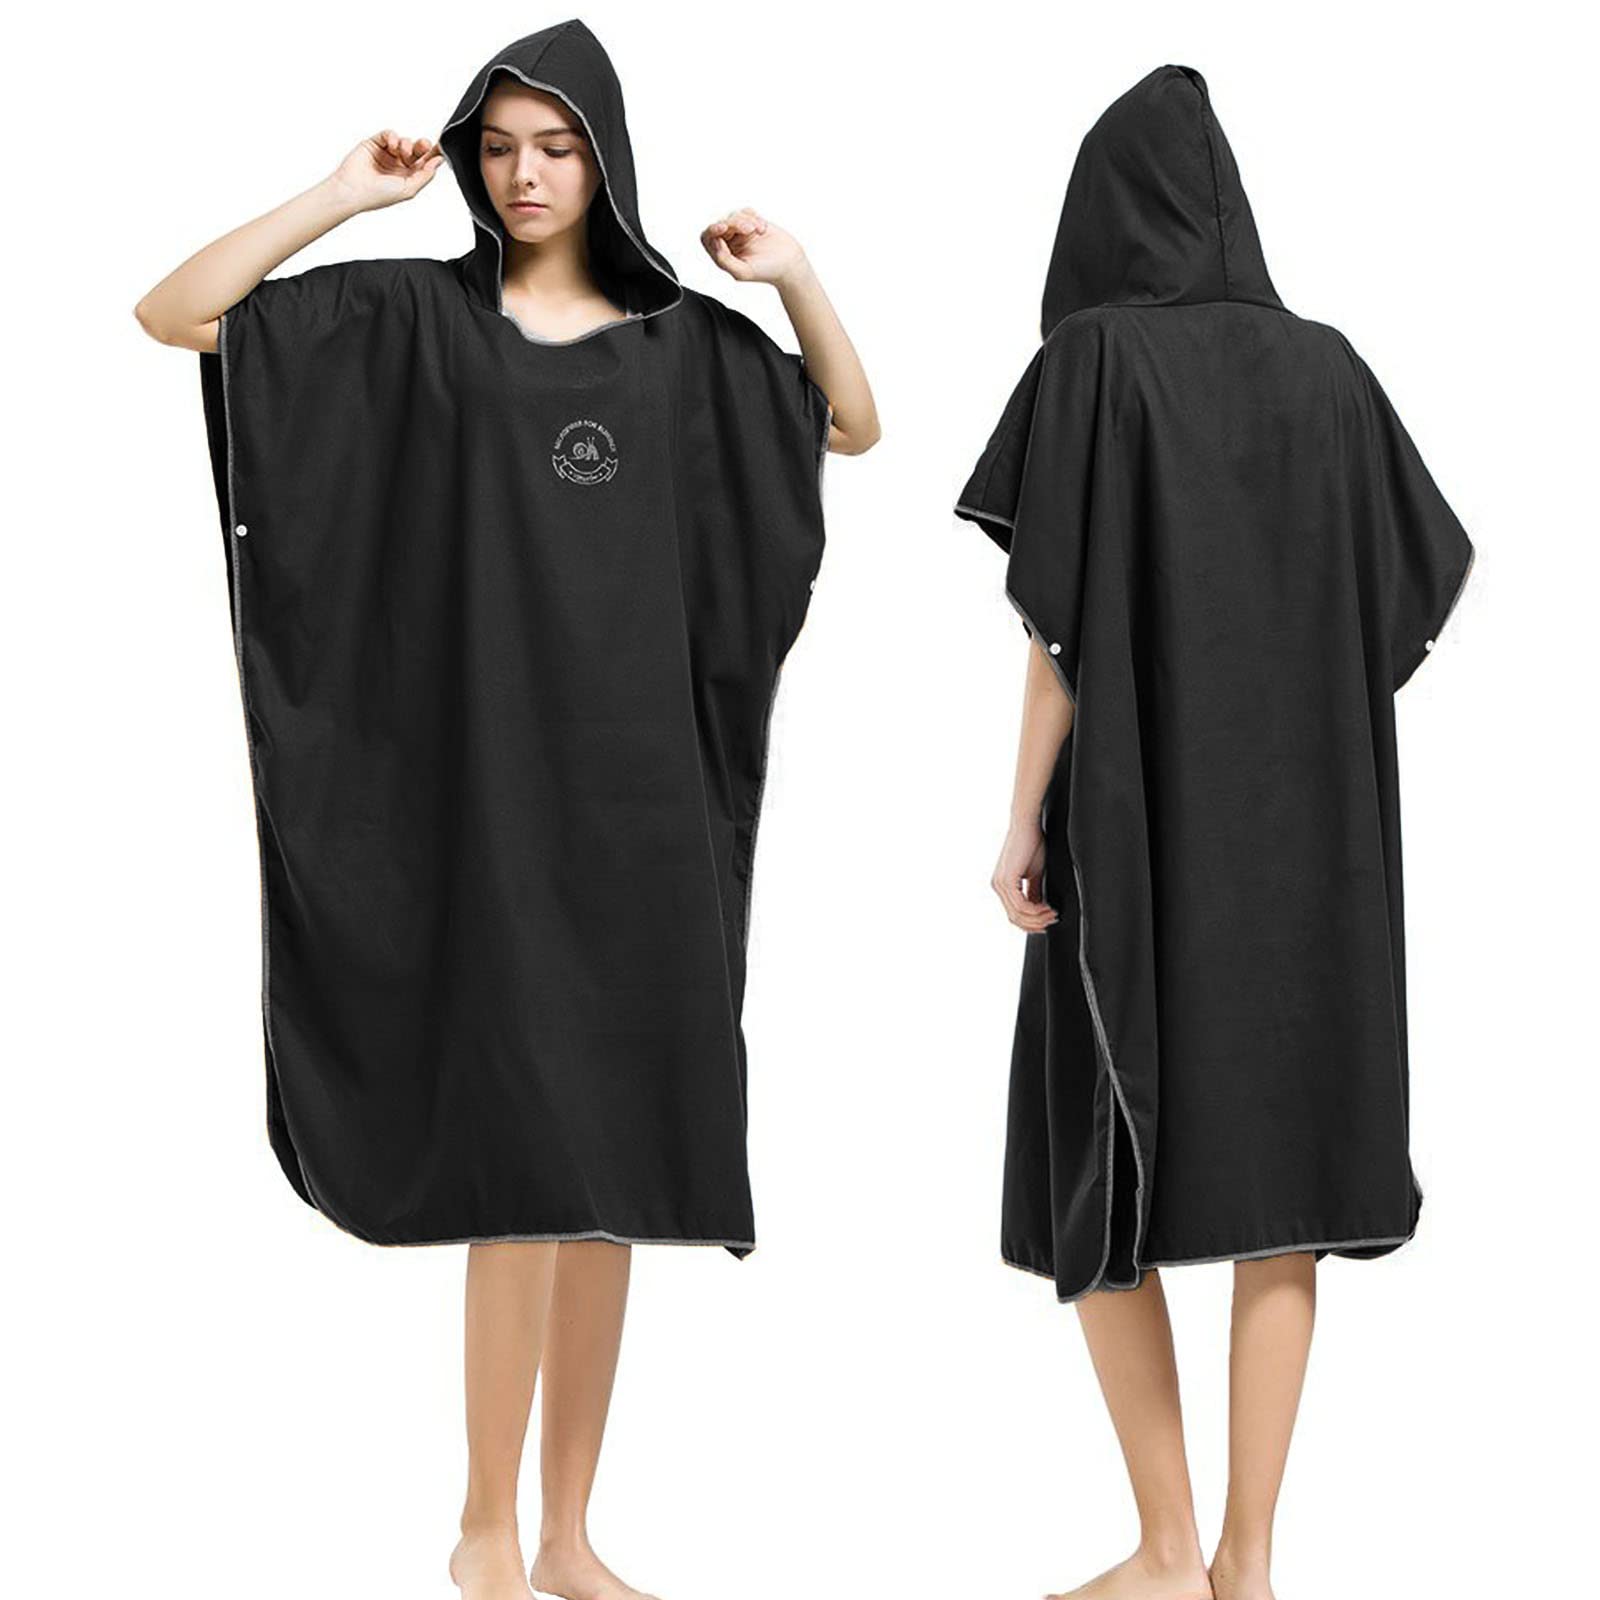 Hiturbo Microfiber Surf Poncho, Wetsuit changing Bath Robe, Quick Dry Pool Swim Beach Towel with Hood (Black)